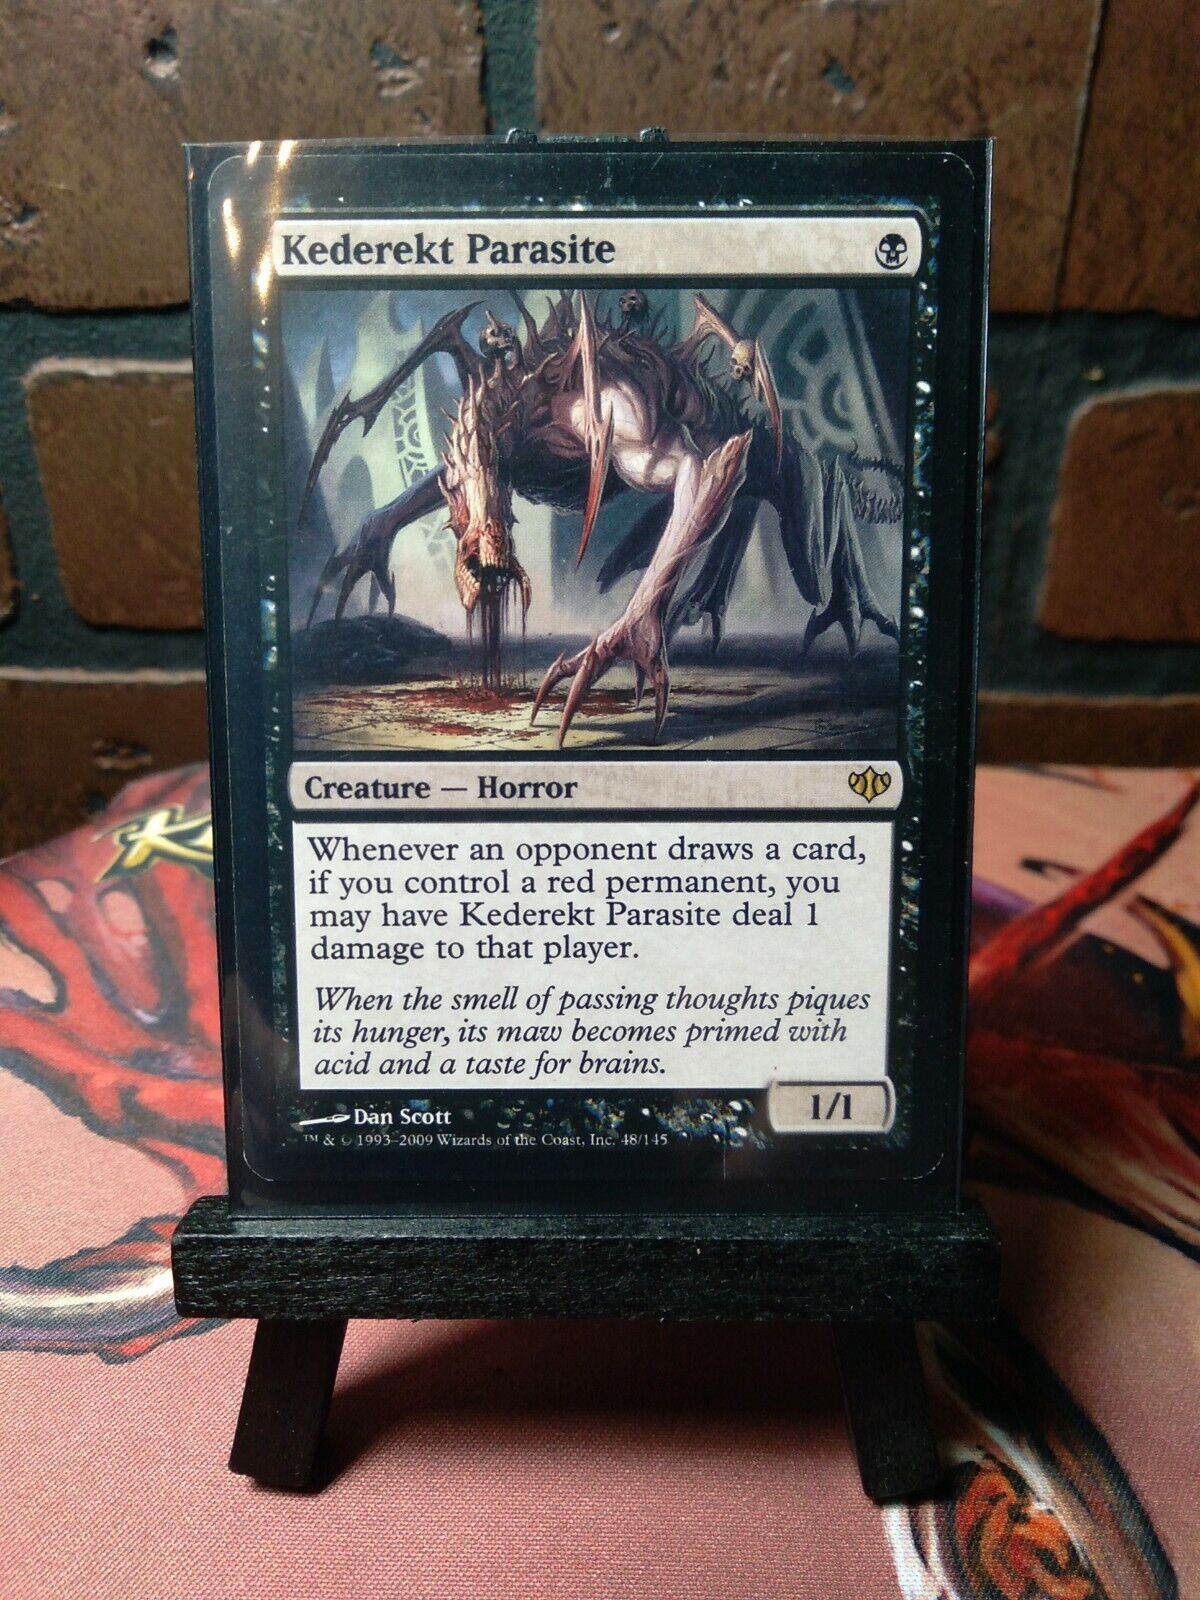 parasite eve trading card